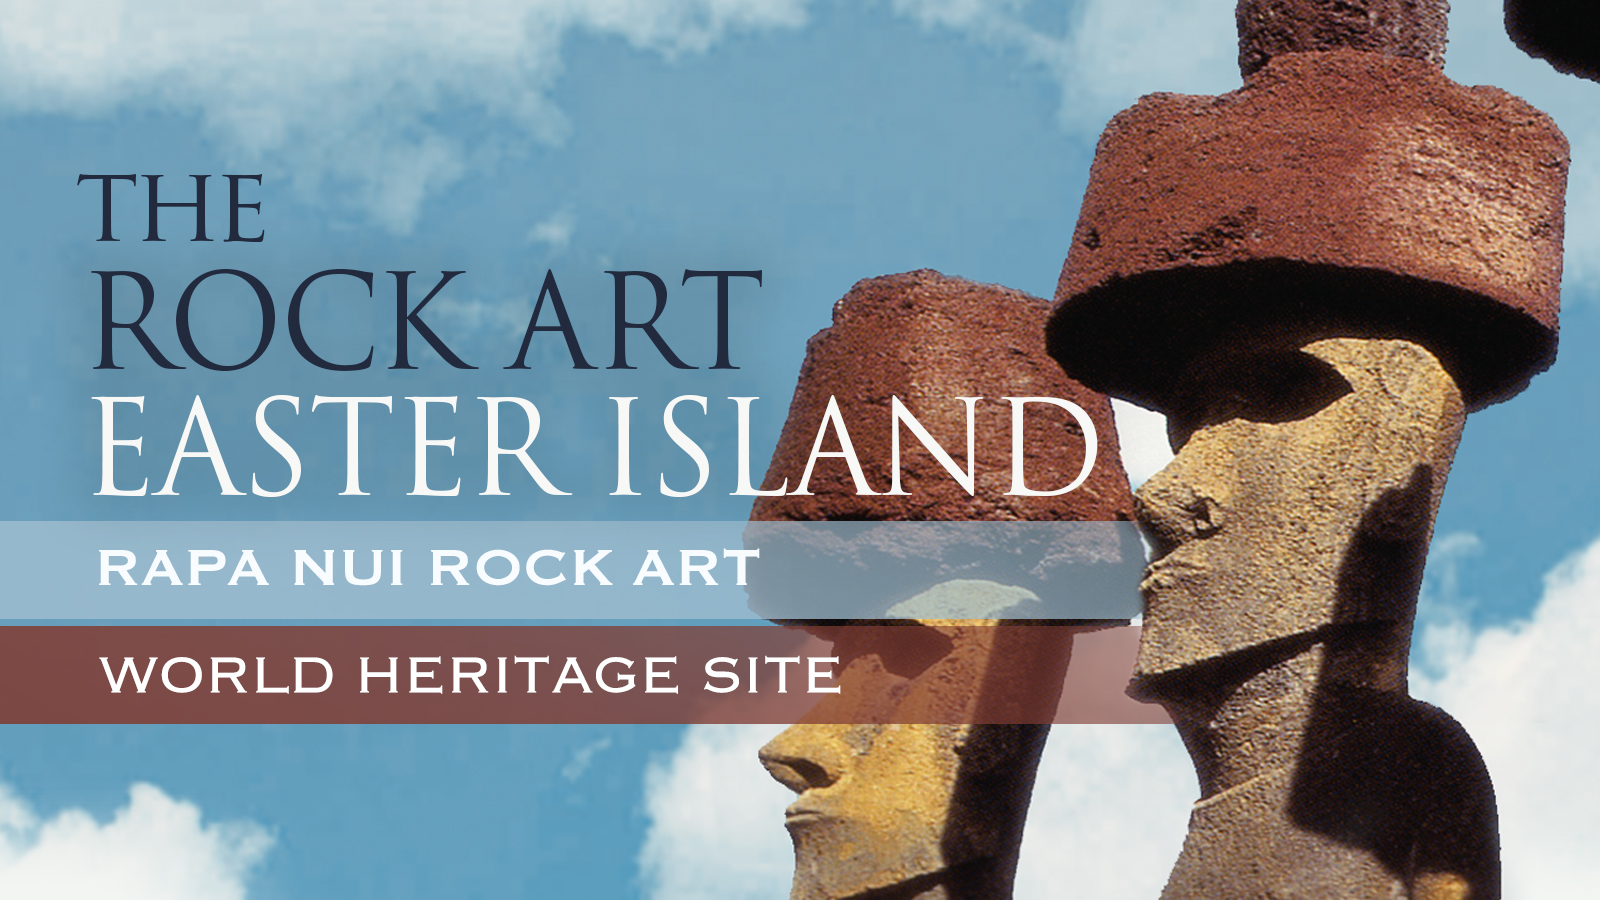 Designs & Motifs of Easter Island's Rock Petroglyph Carvings Bradshaw Foundation